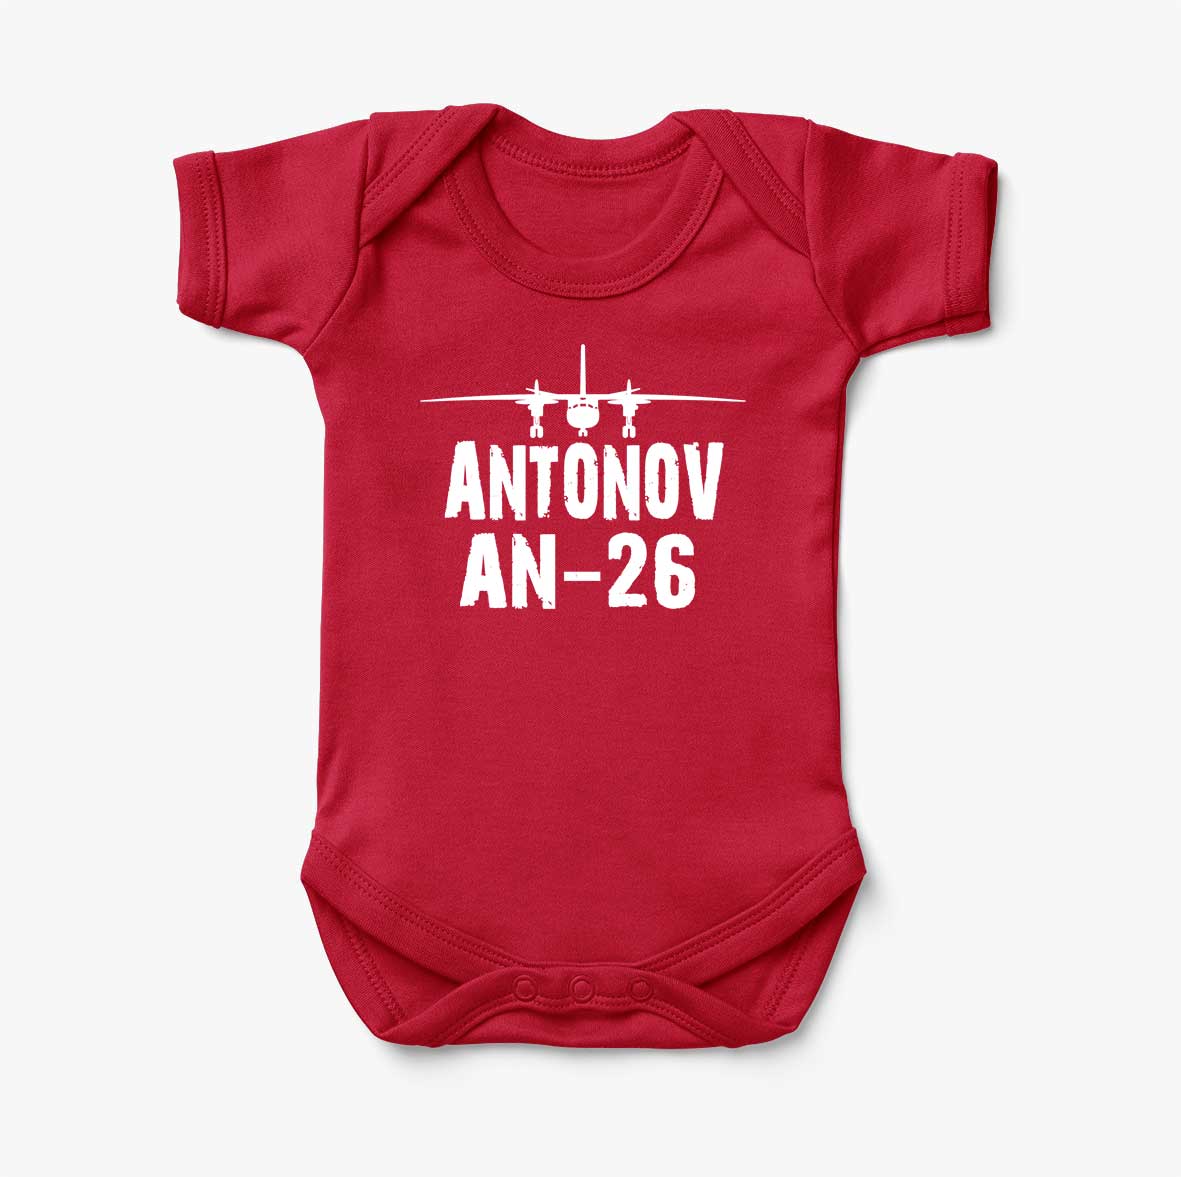 Antonov AN-26 & Plane Designed Baby Bodysuits